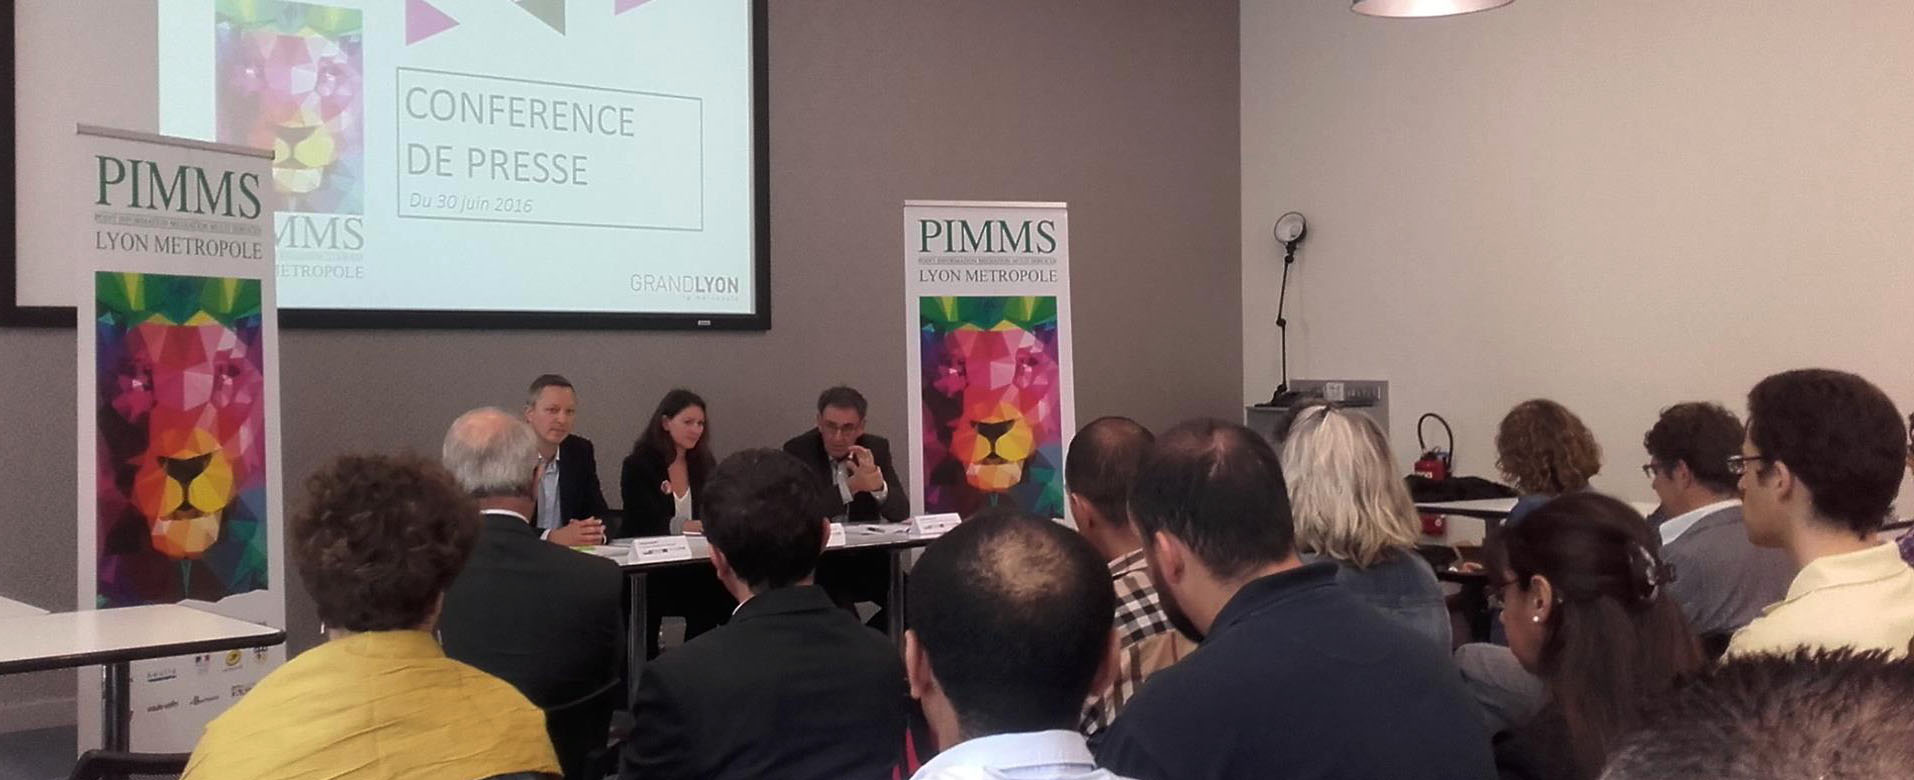 PIMMS_conference_presse